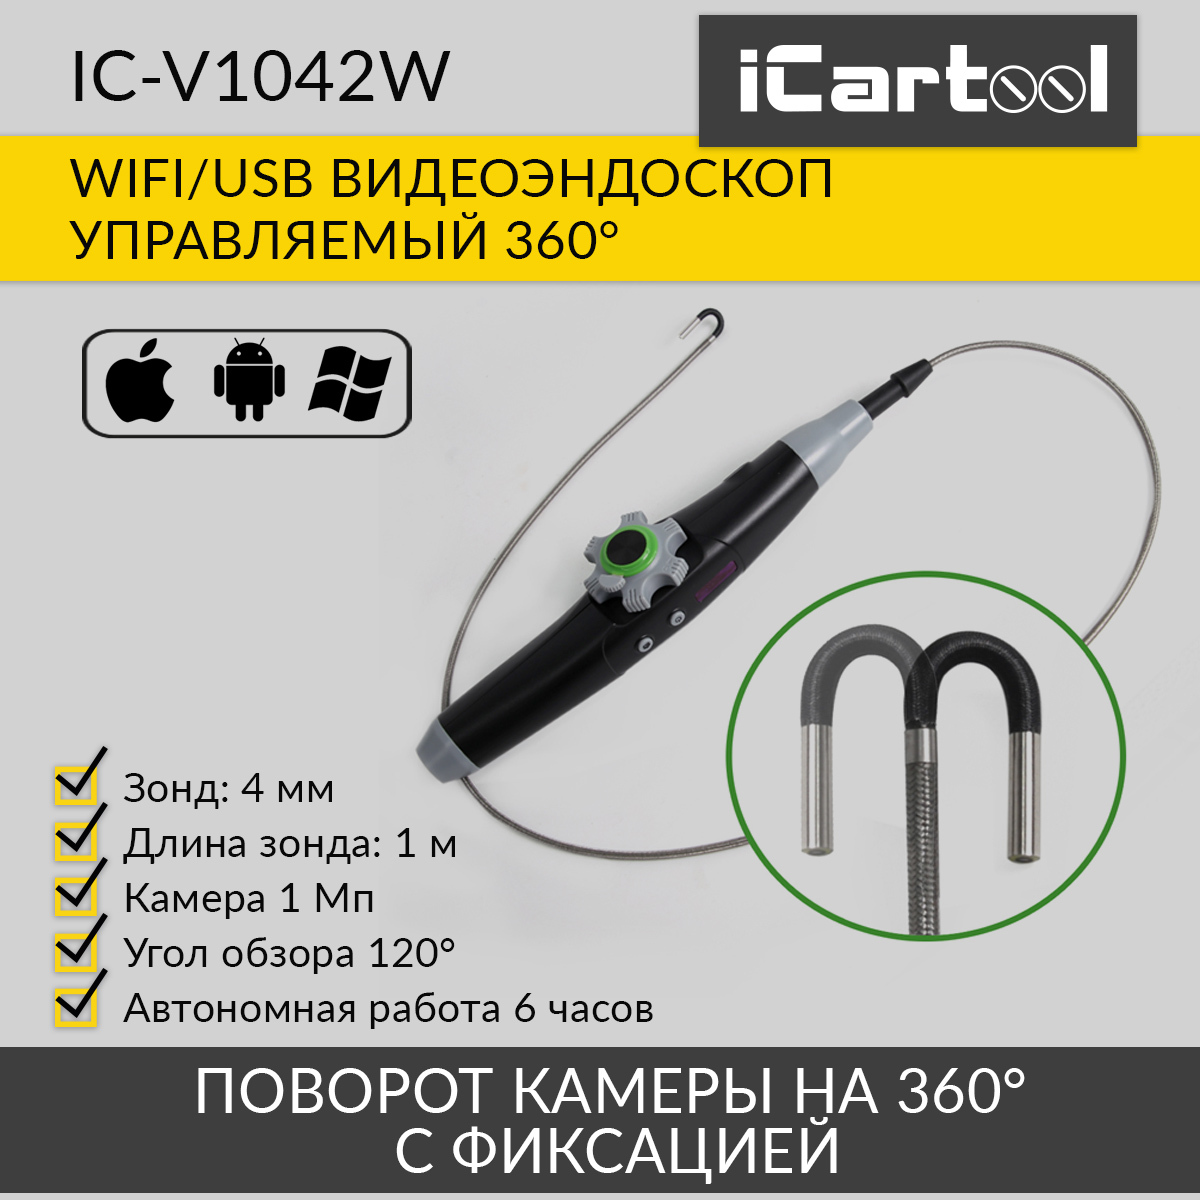 Видеоэндоскоп управляемый iCartool IC-V1042W WIFI/USB, 1Мп, 1168х720, 1м, 4мм зонд, 360° видеоэндоскоп управляемый icartool ic v1042w wifi usb 1мп 1168х720 1м 4мм зонд 360°